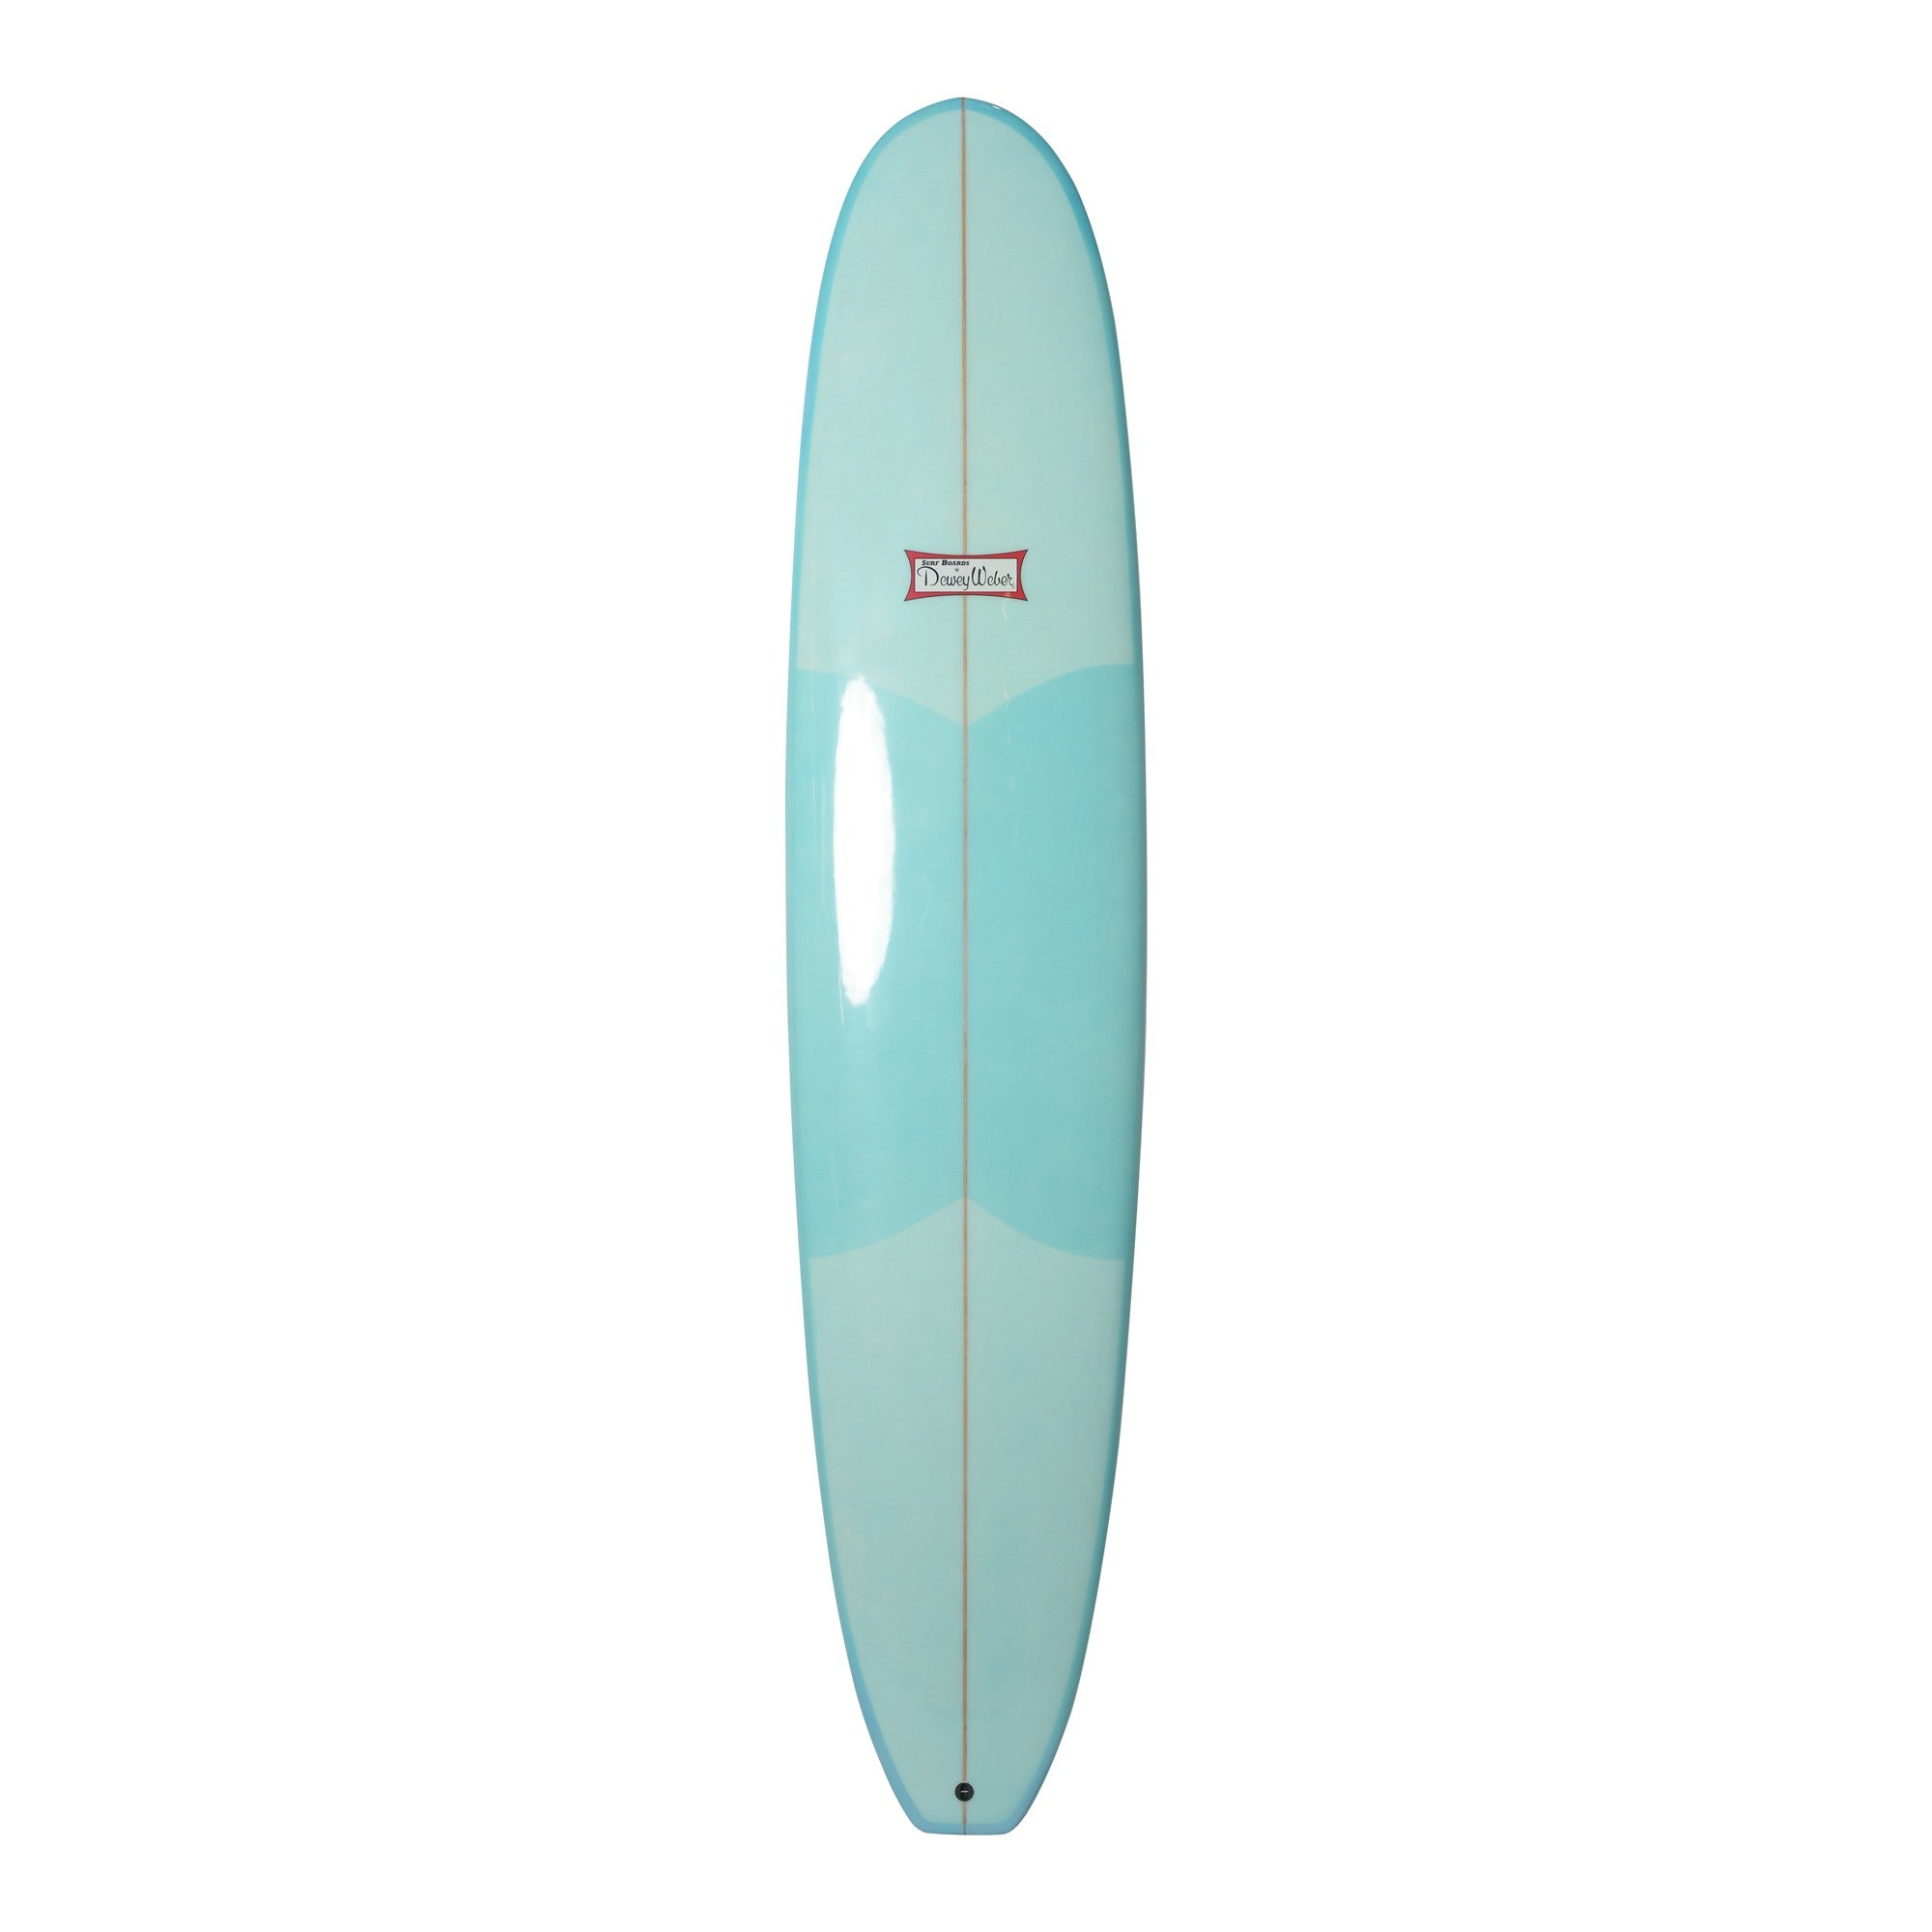 WEBER SURFBOARDS - Quantum 9'2 - Blue